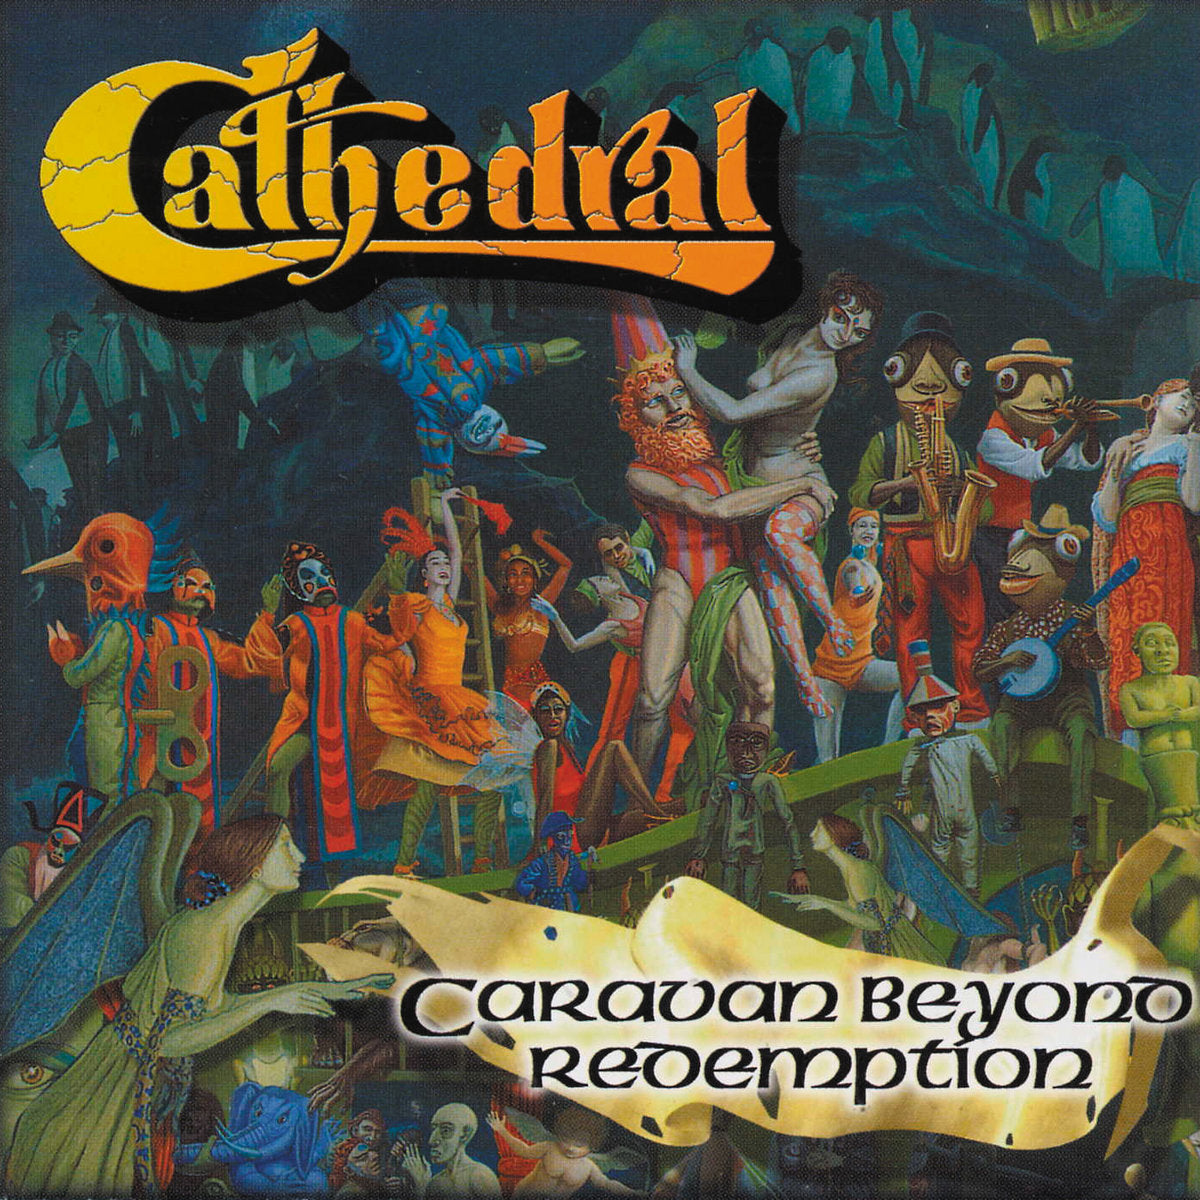 Cathedral "Caravan Beyond Redemption" Digipak CD